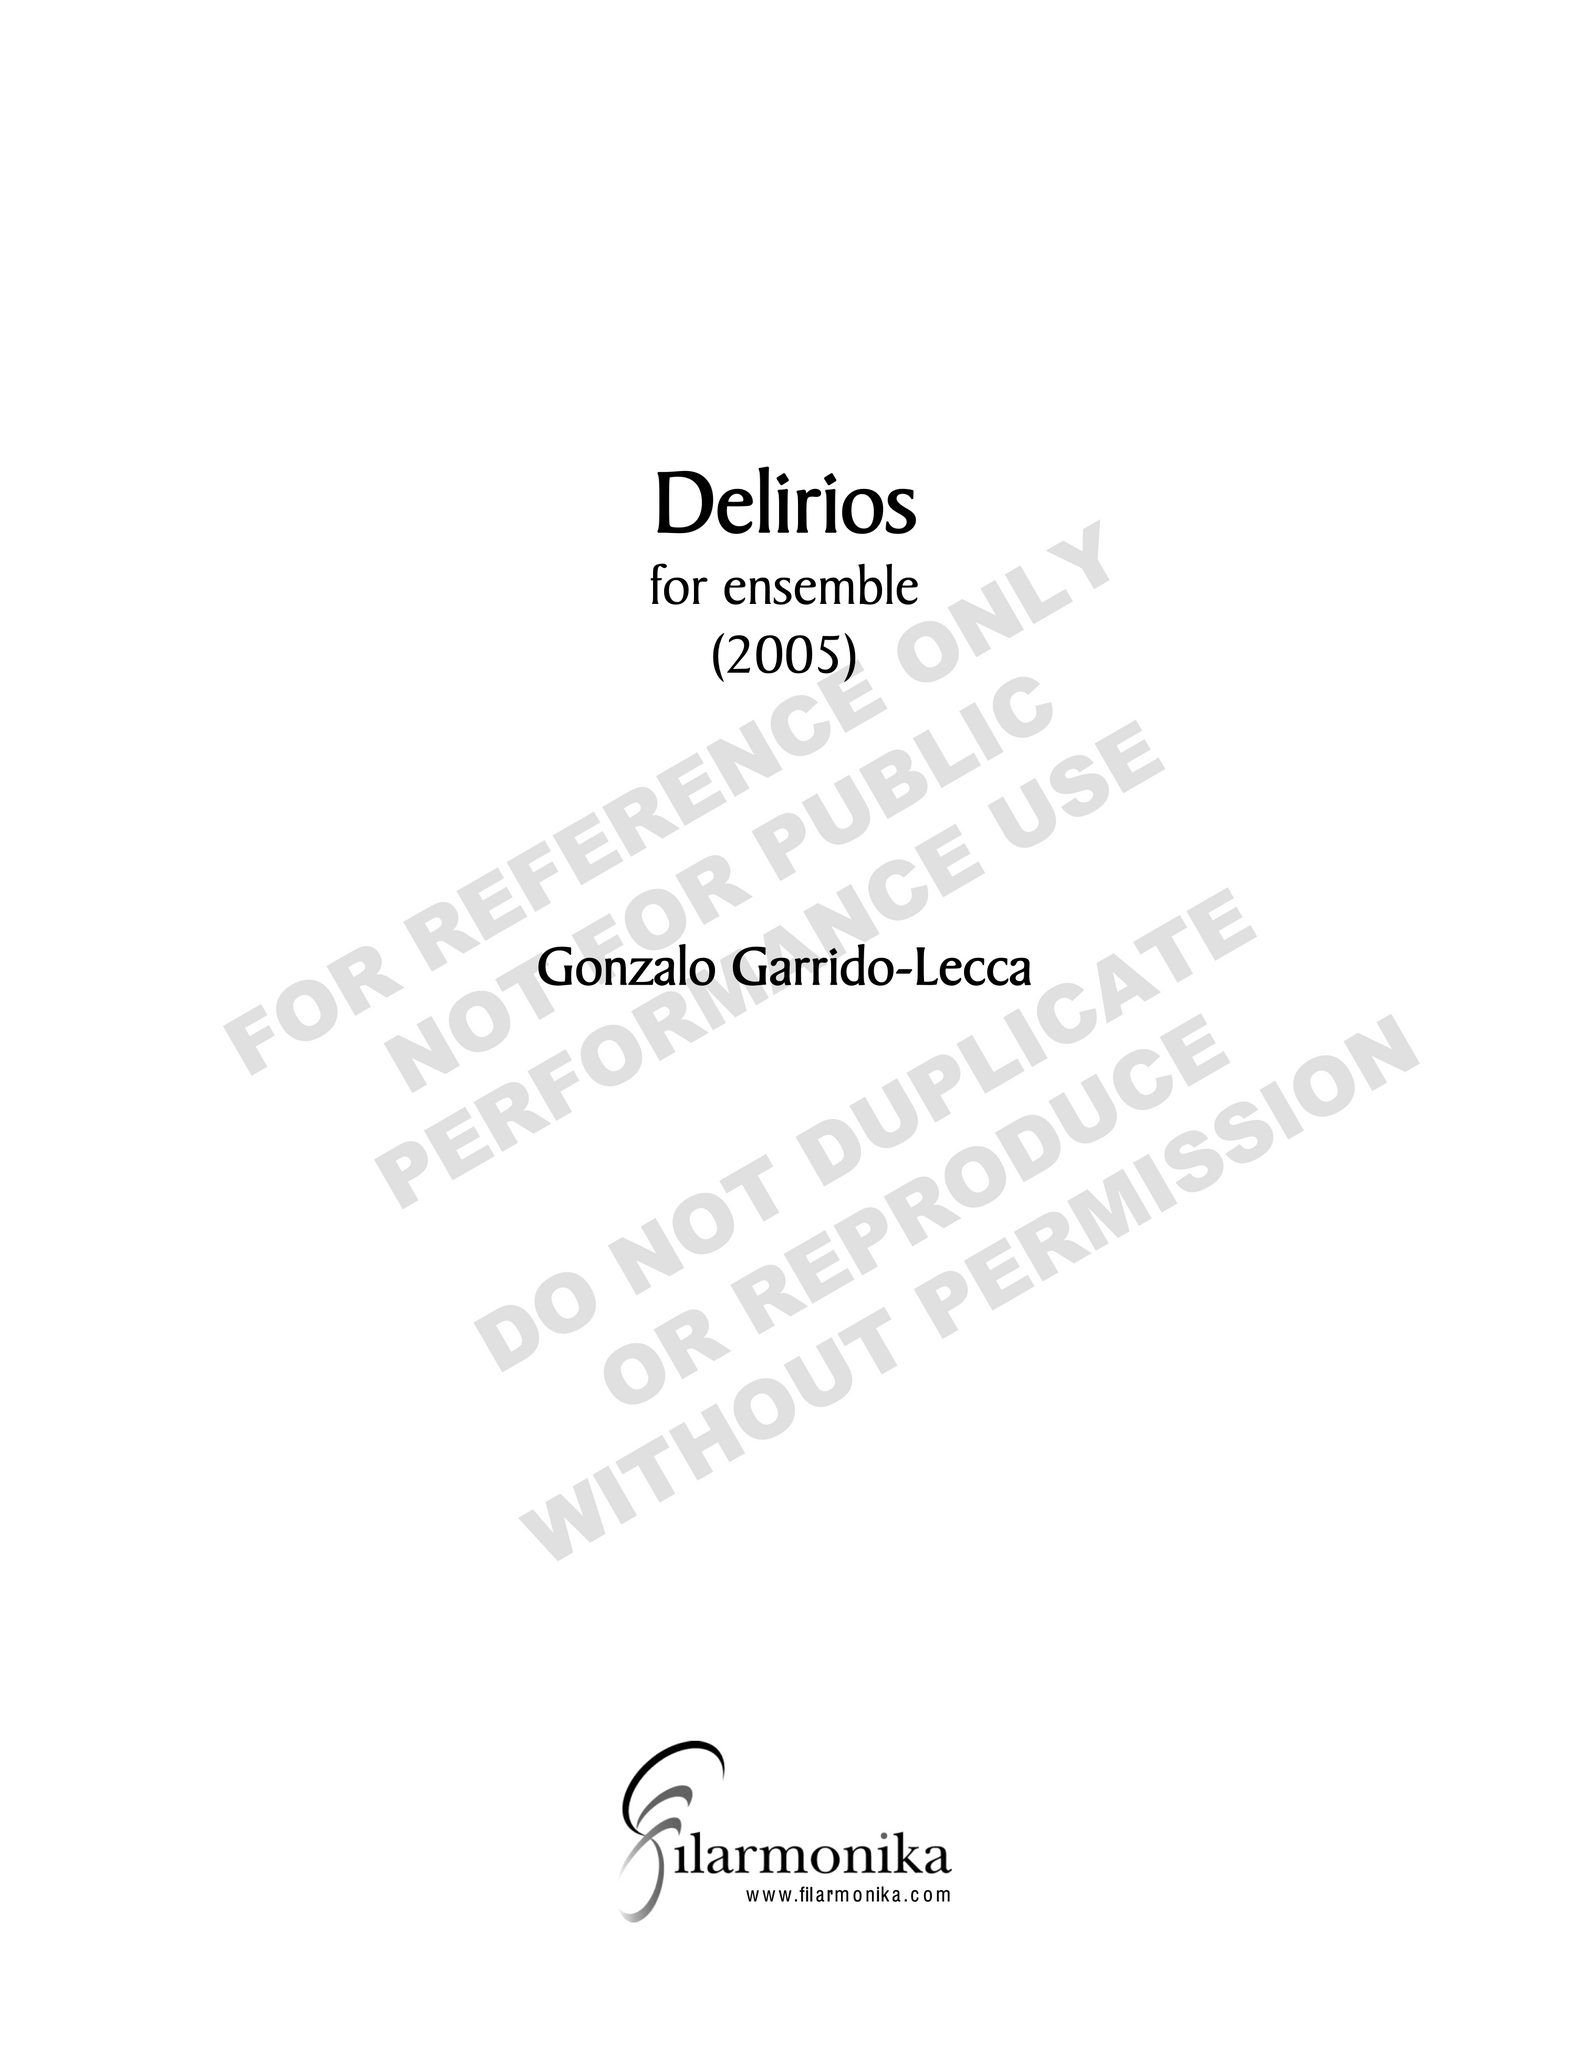 Delirios, for ensemble